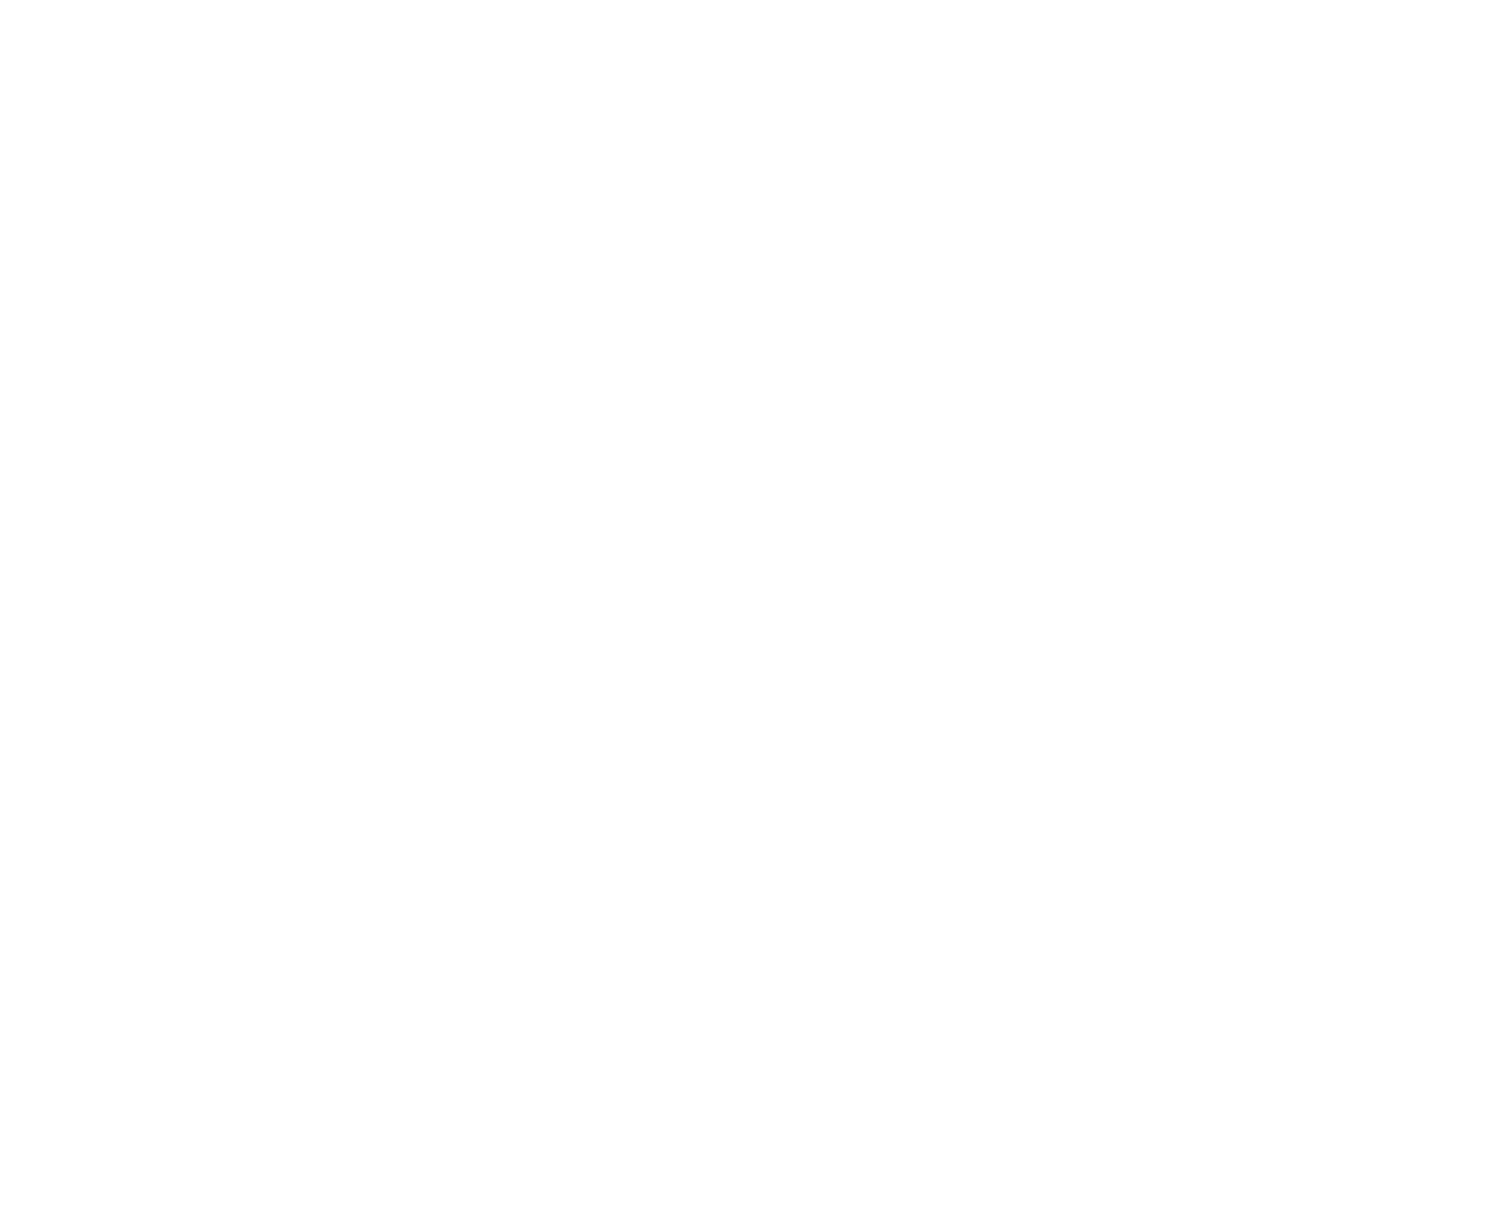 Edinburgh Multicultural Festival